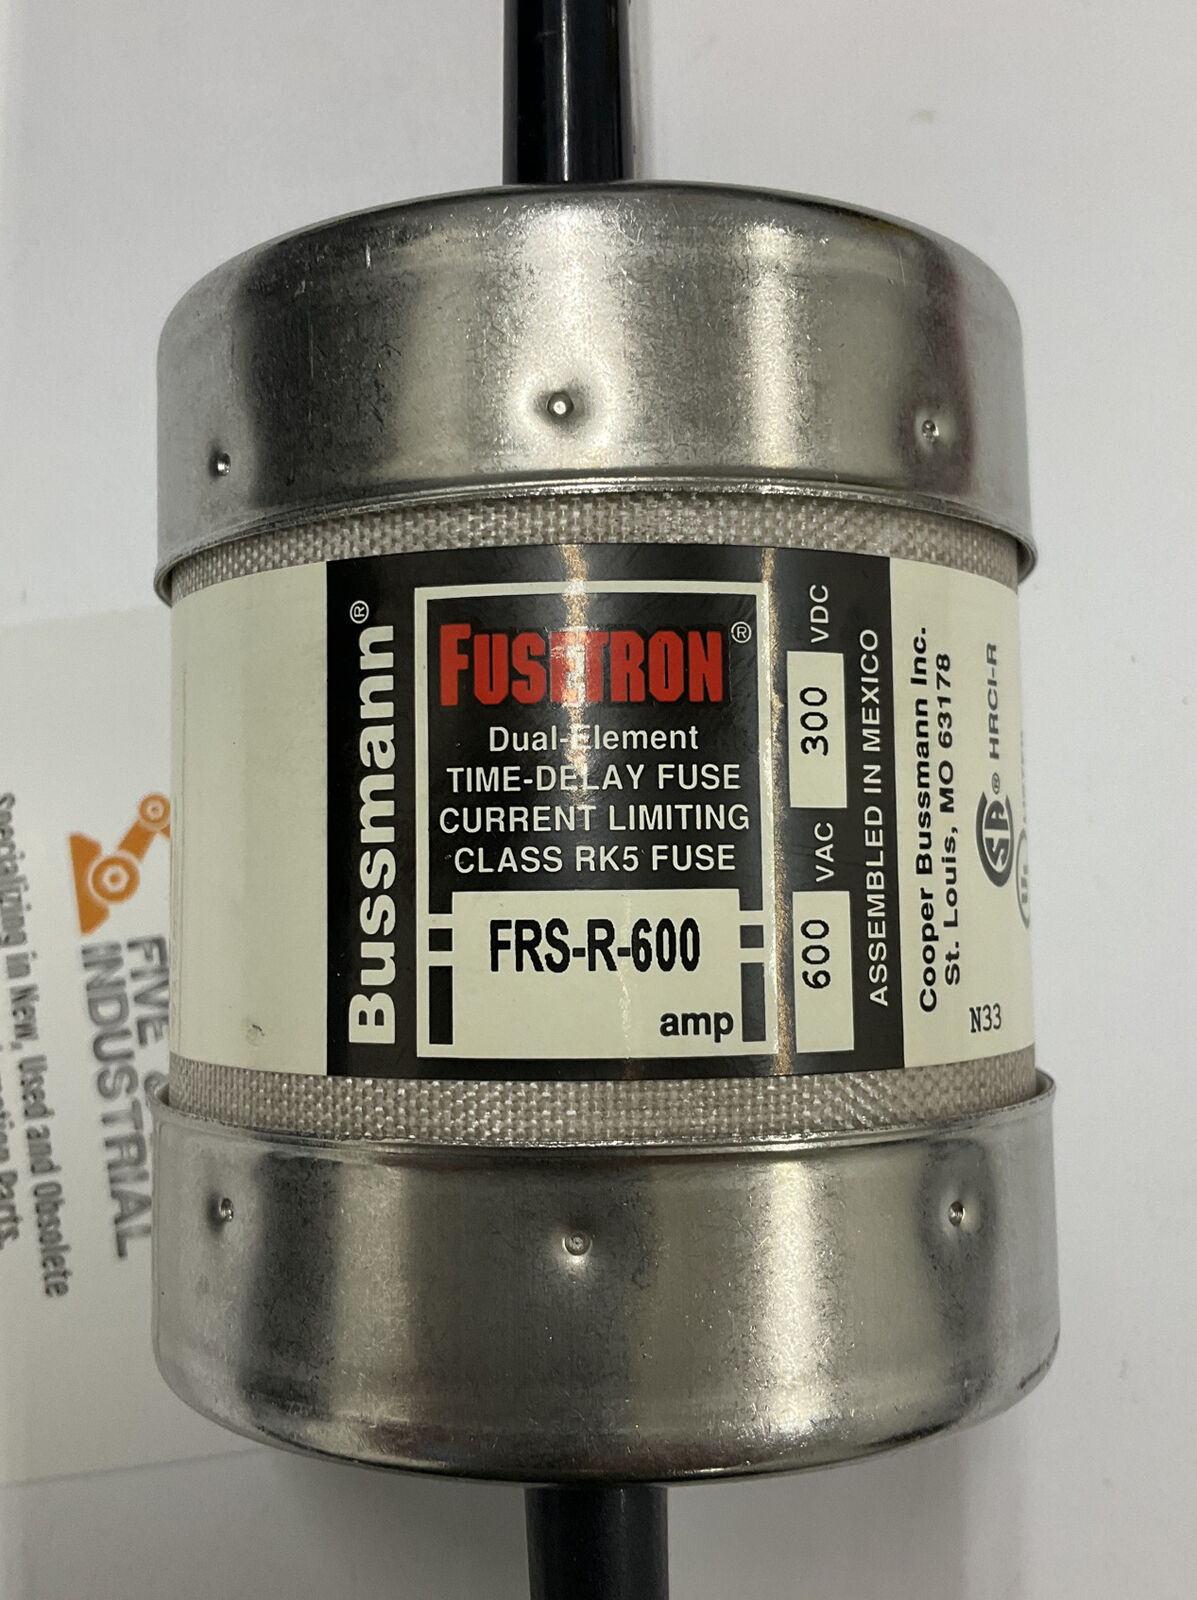 Fustron New Eaton Bussmann FRS-R-600 Time Delay Fuse 600A 600VAC, 300VDC (GR207)